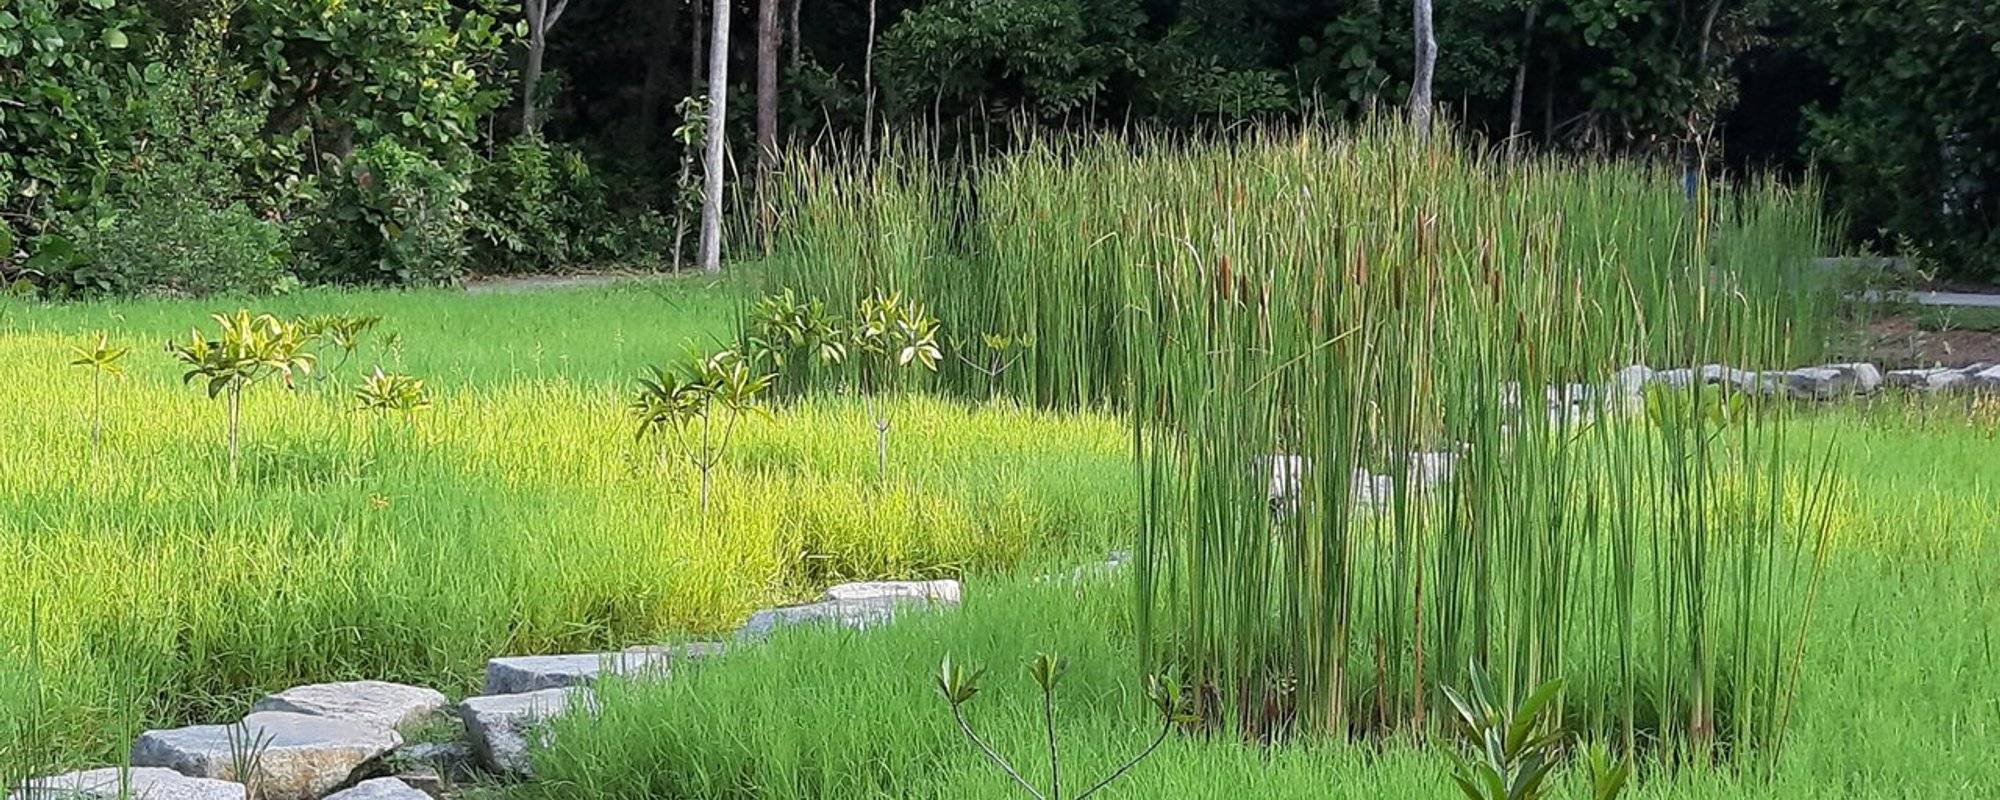 A Forgotten Wetland in Urban City @ Sungei Buloh Wetland, Singapore (被遗忘的沼泽公园)_Part 1